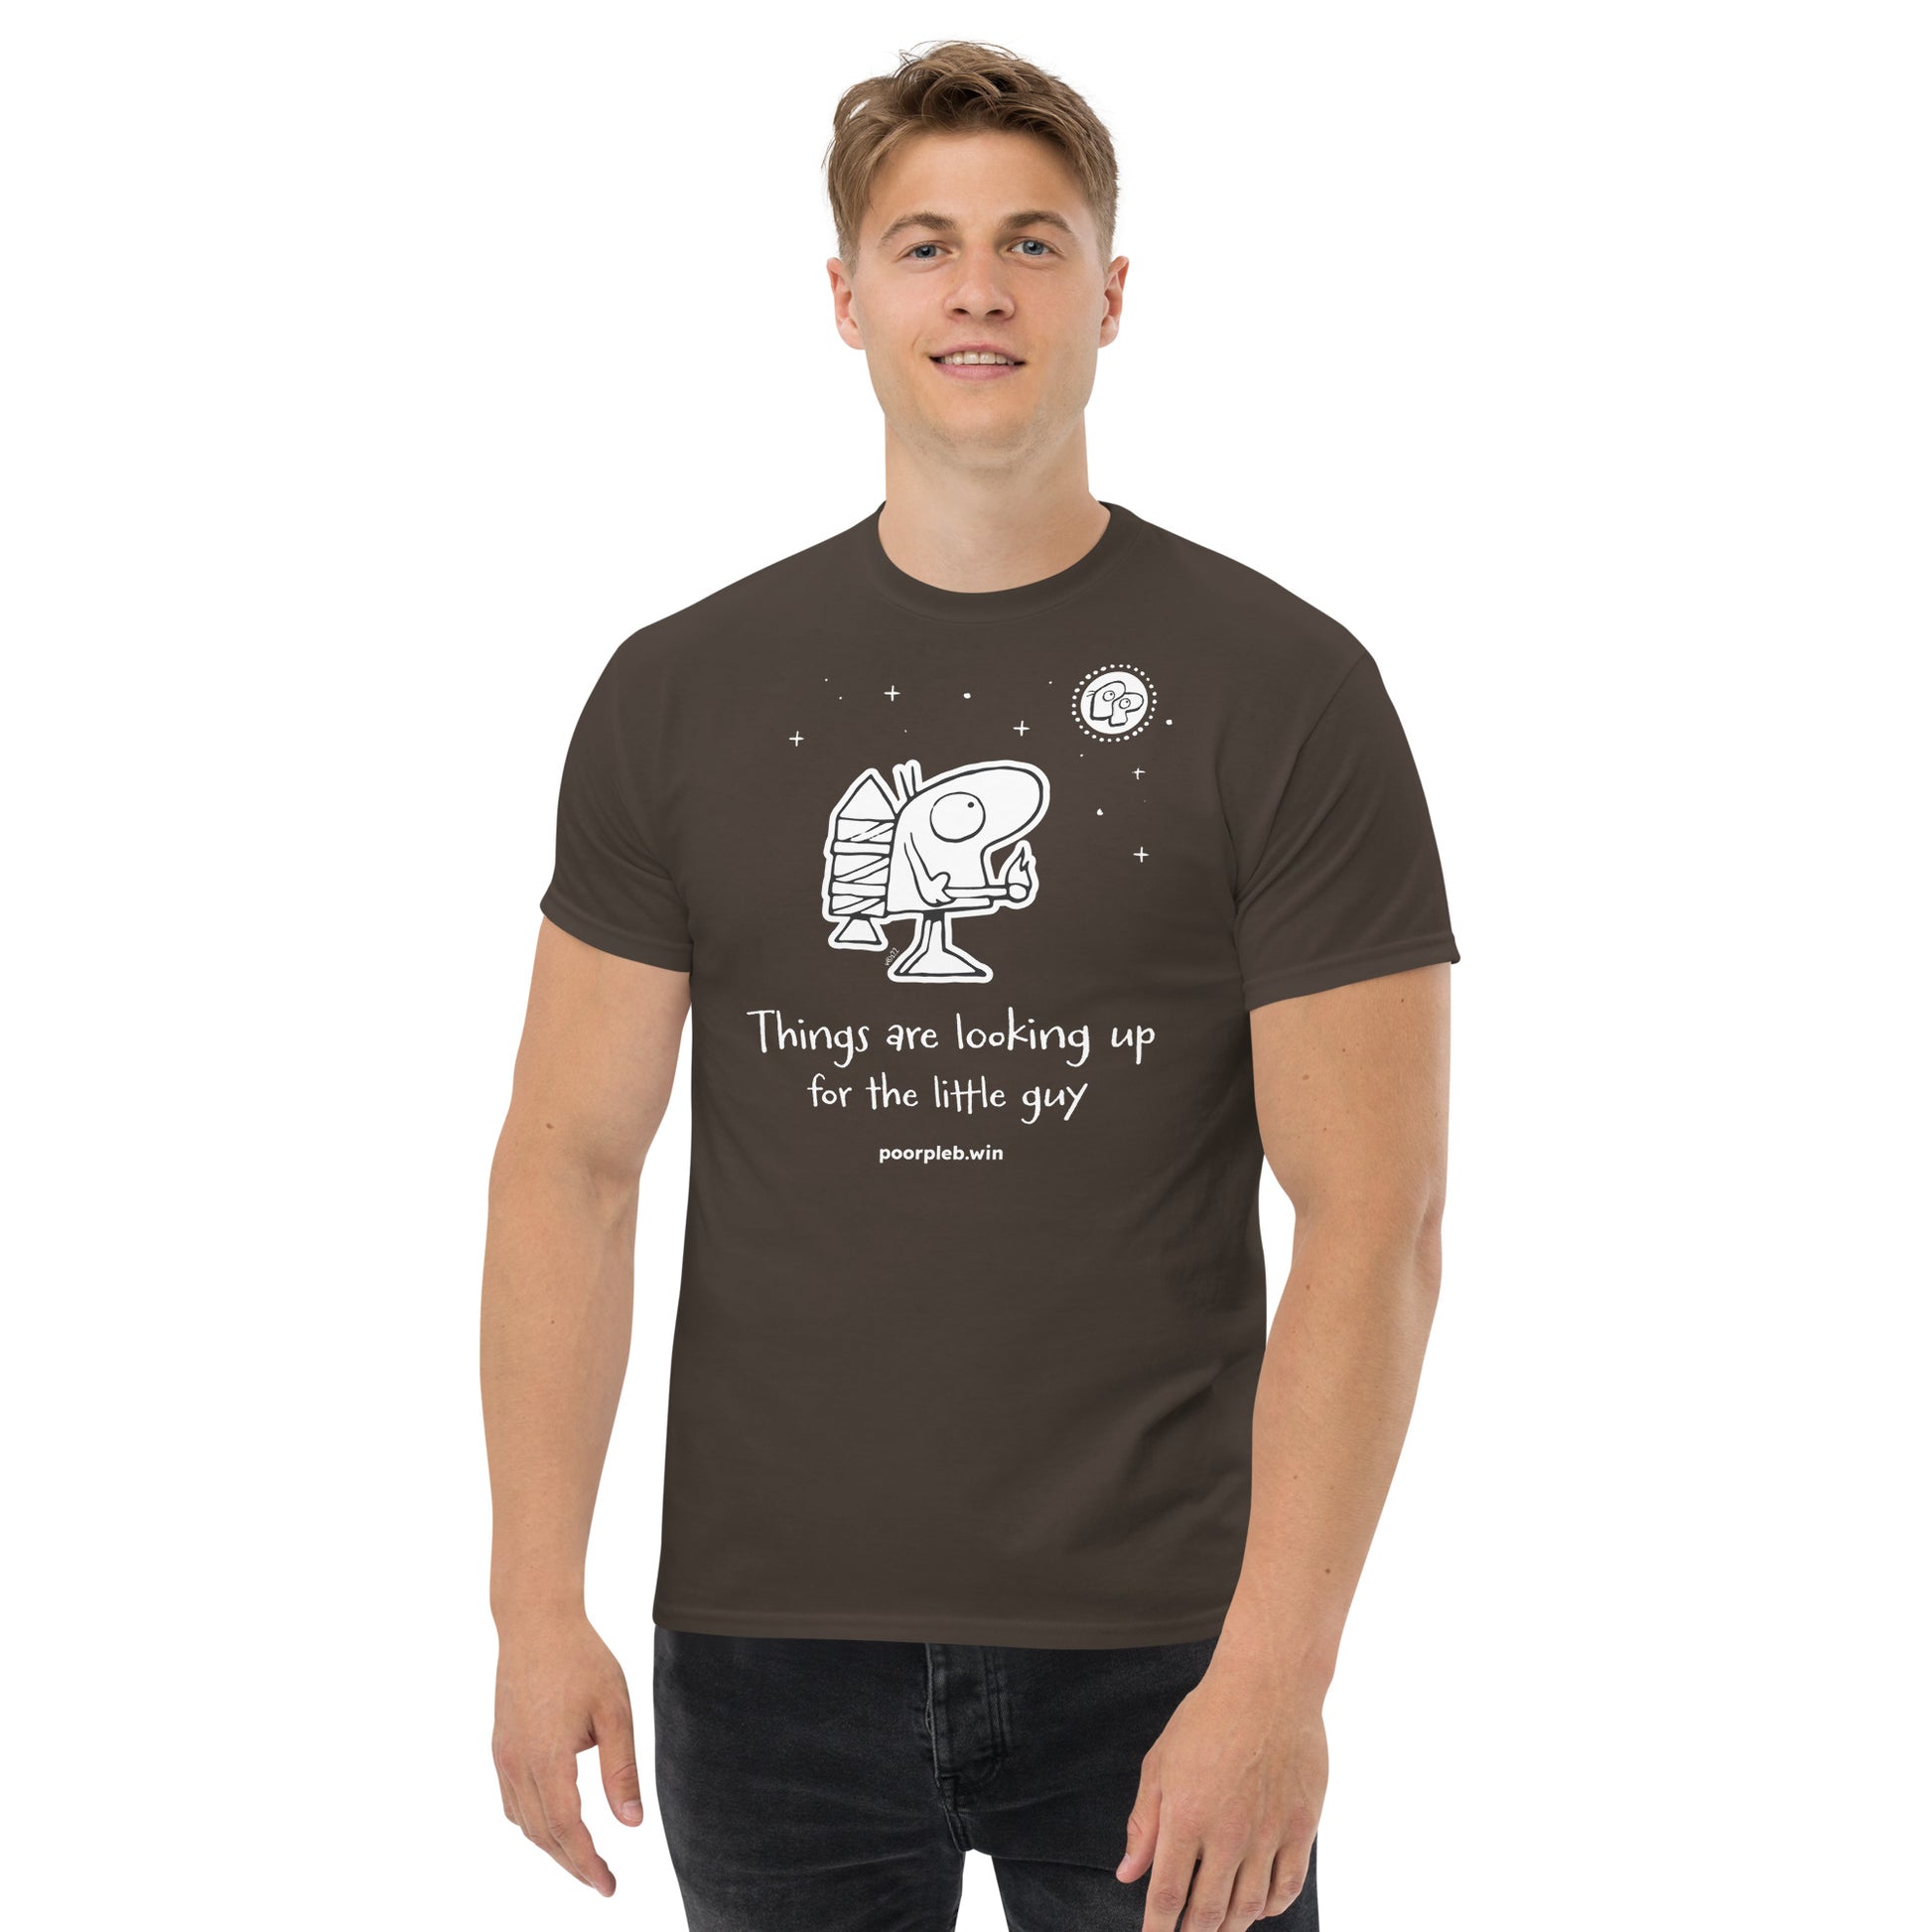 Shirt for : Brickplanet Guest